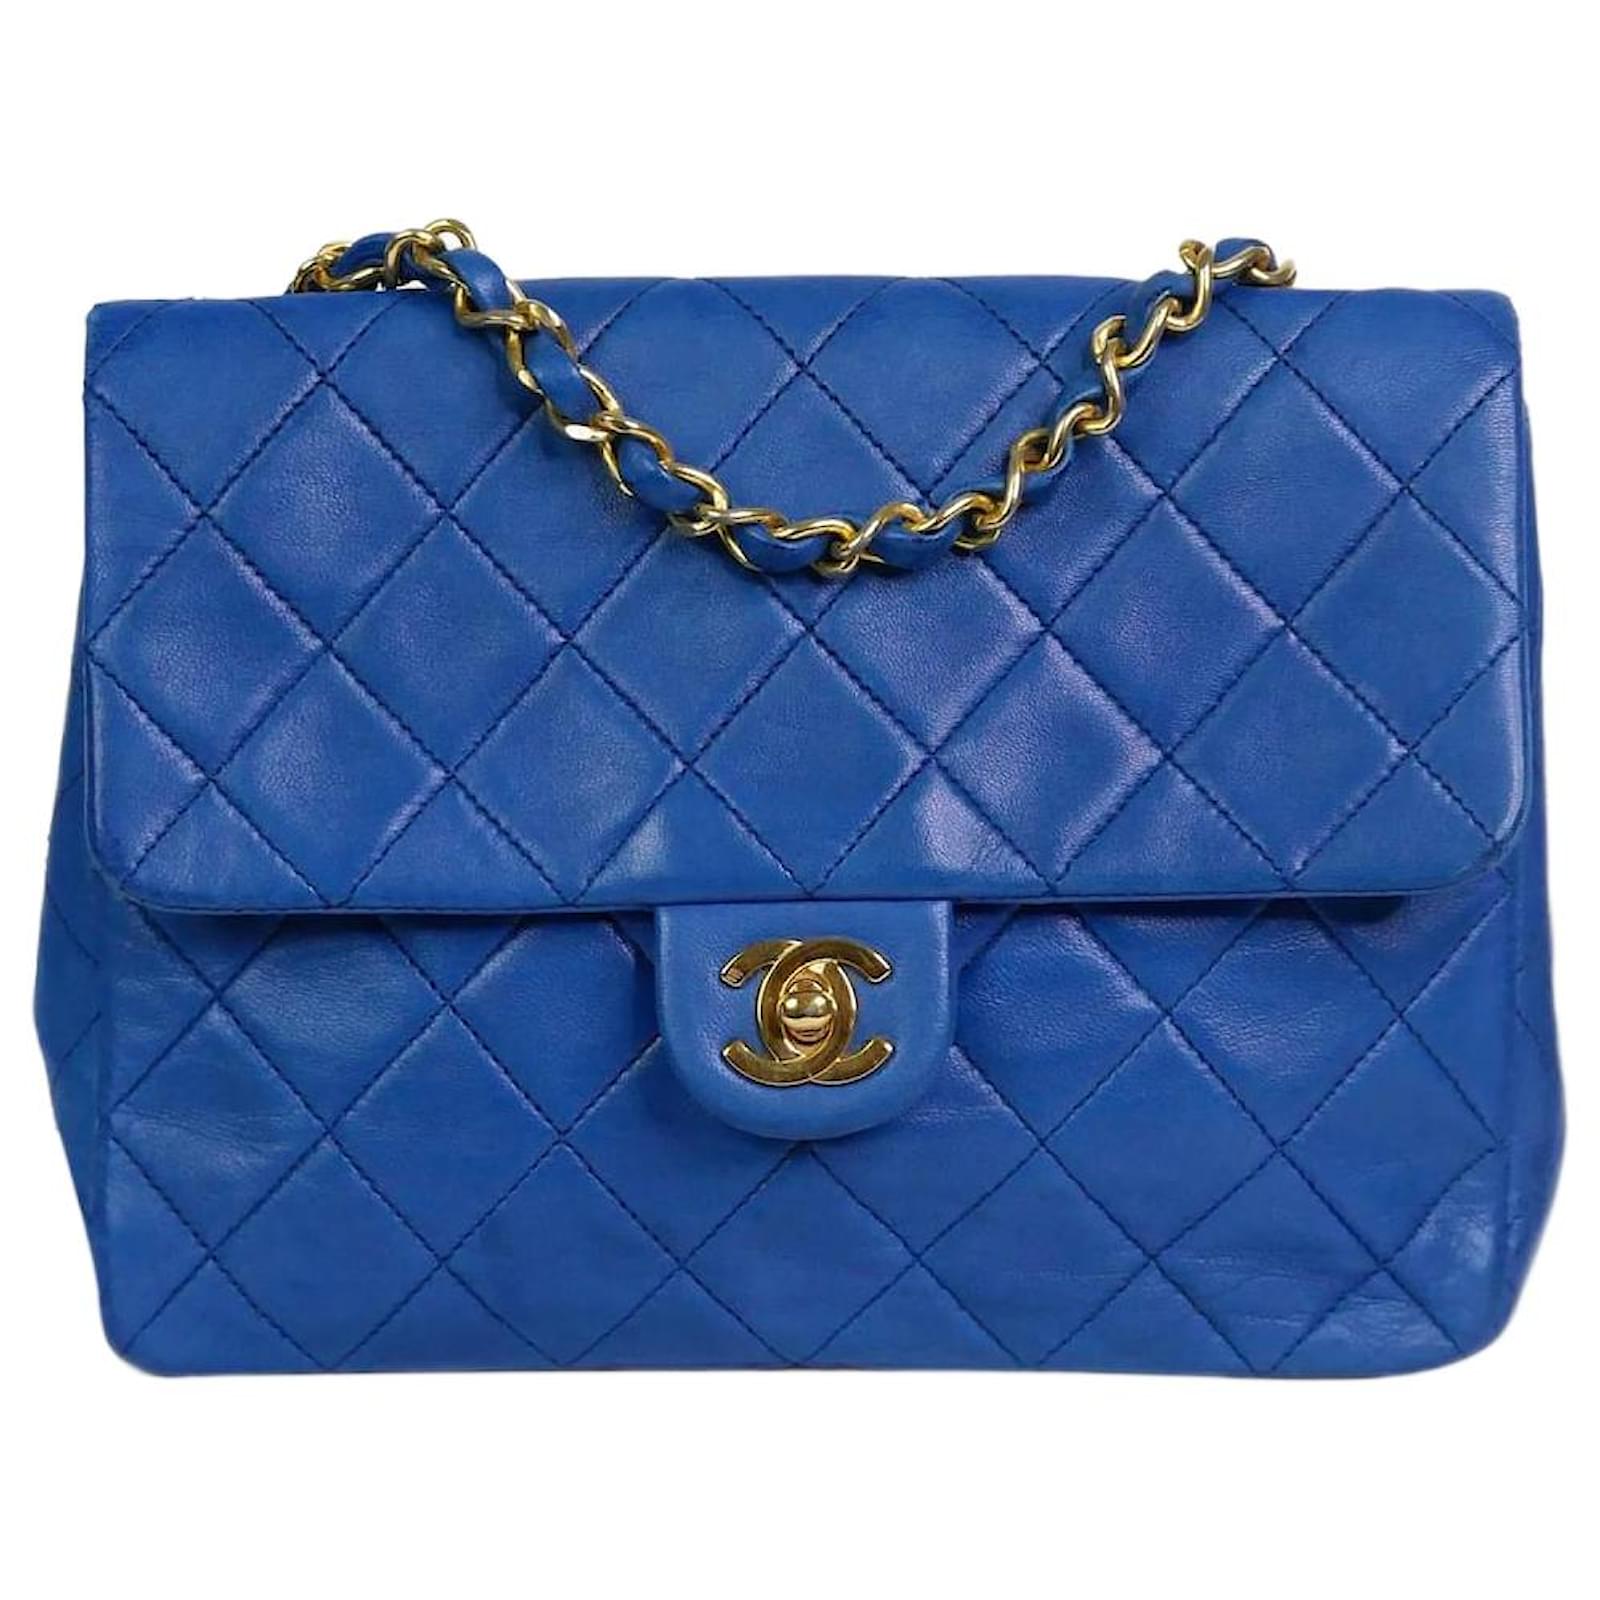 Chanel Caviar Wild Stitch Flap Bag - Navy Blue